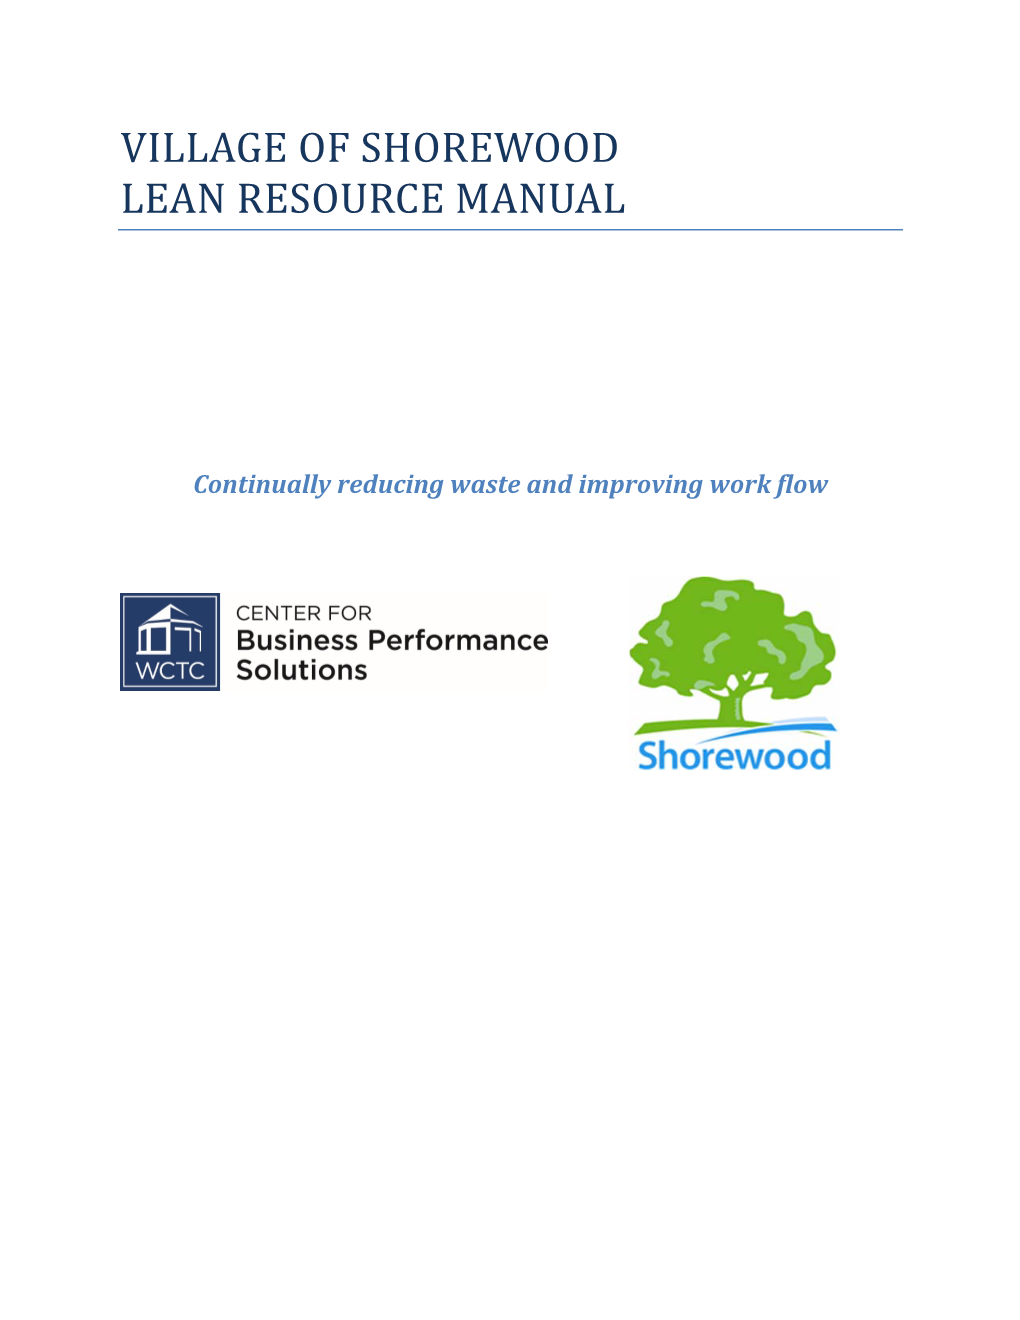 Village of Shorewood Lean Resource Manual